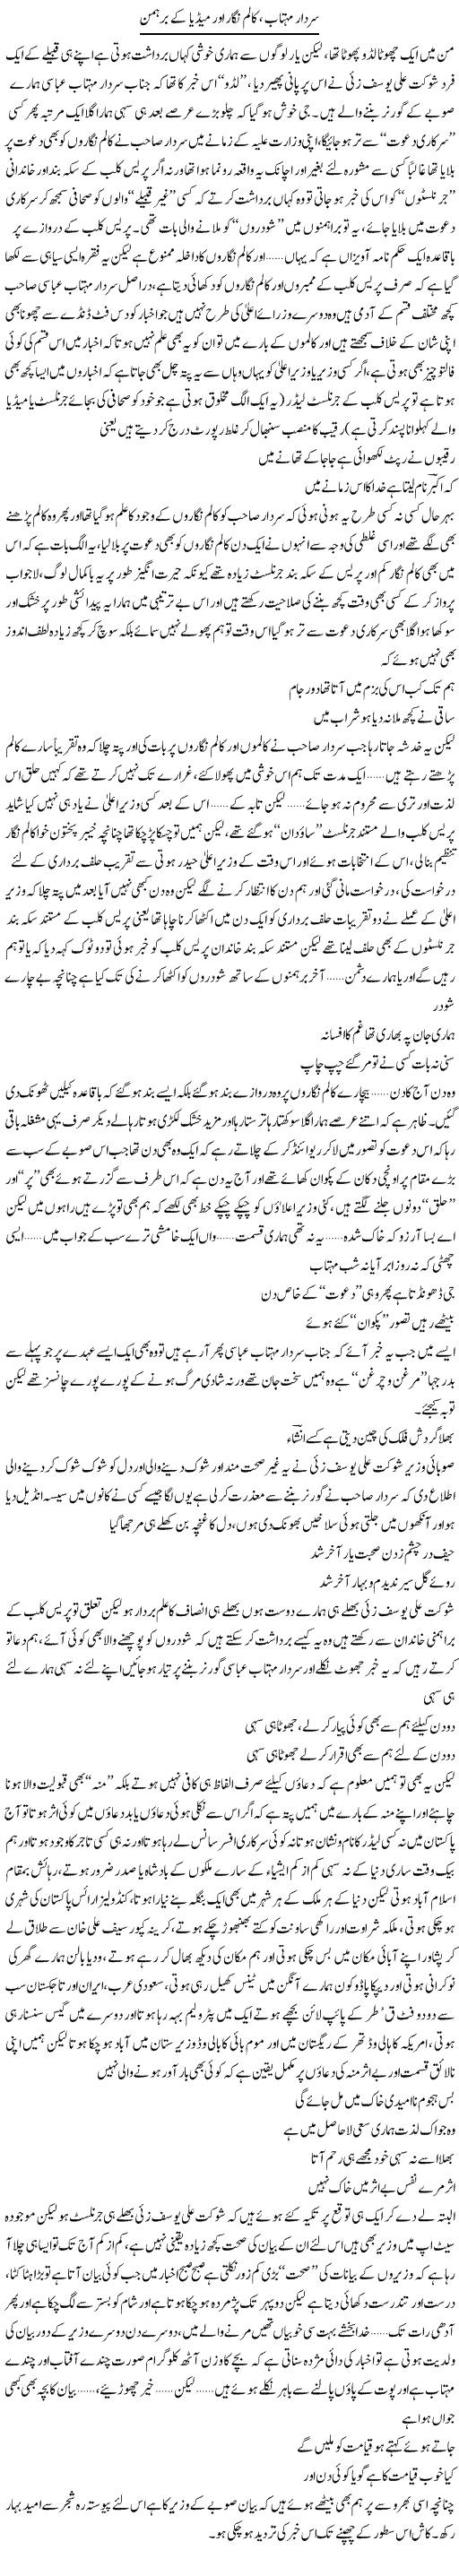 Sardar Mehtab Column Nigar Aur Media Kay Barhaman | Saad Ullah Jan Barq | Daily Urdu Columns